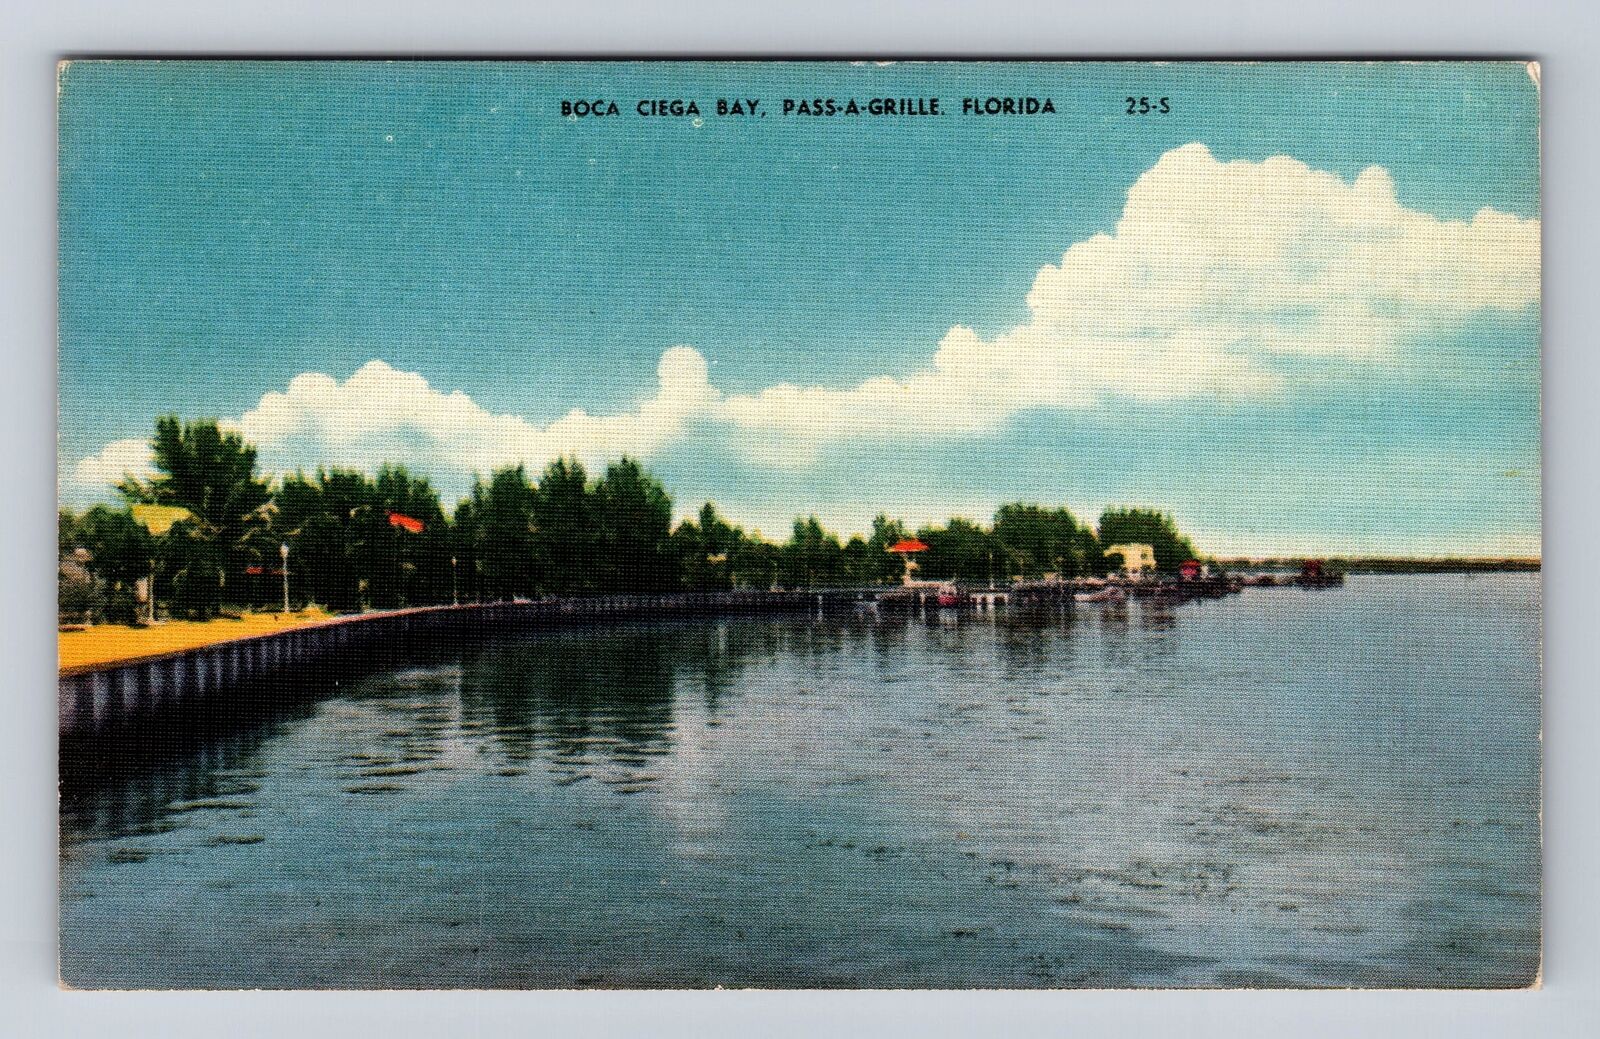 Pass-A-Grille FL-Florida, Boca Ciega Bay, Antique, Vintage Souvenir Postcard